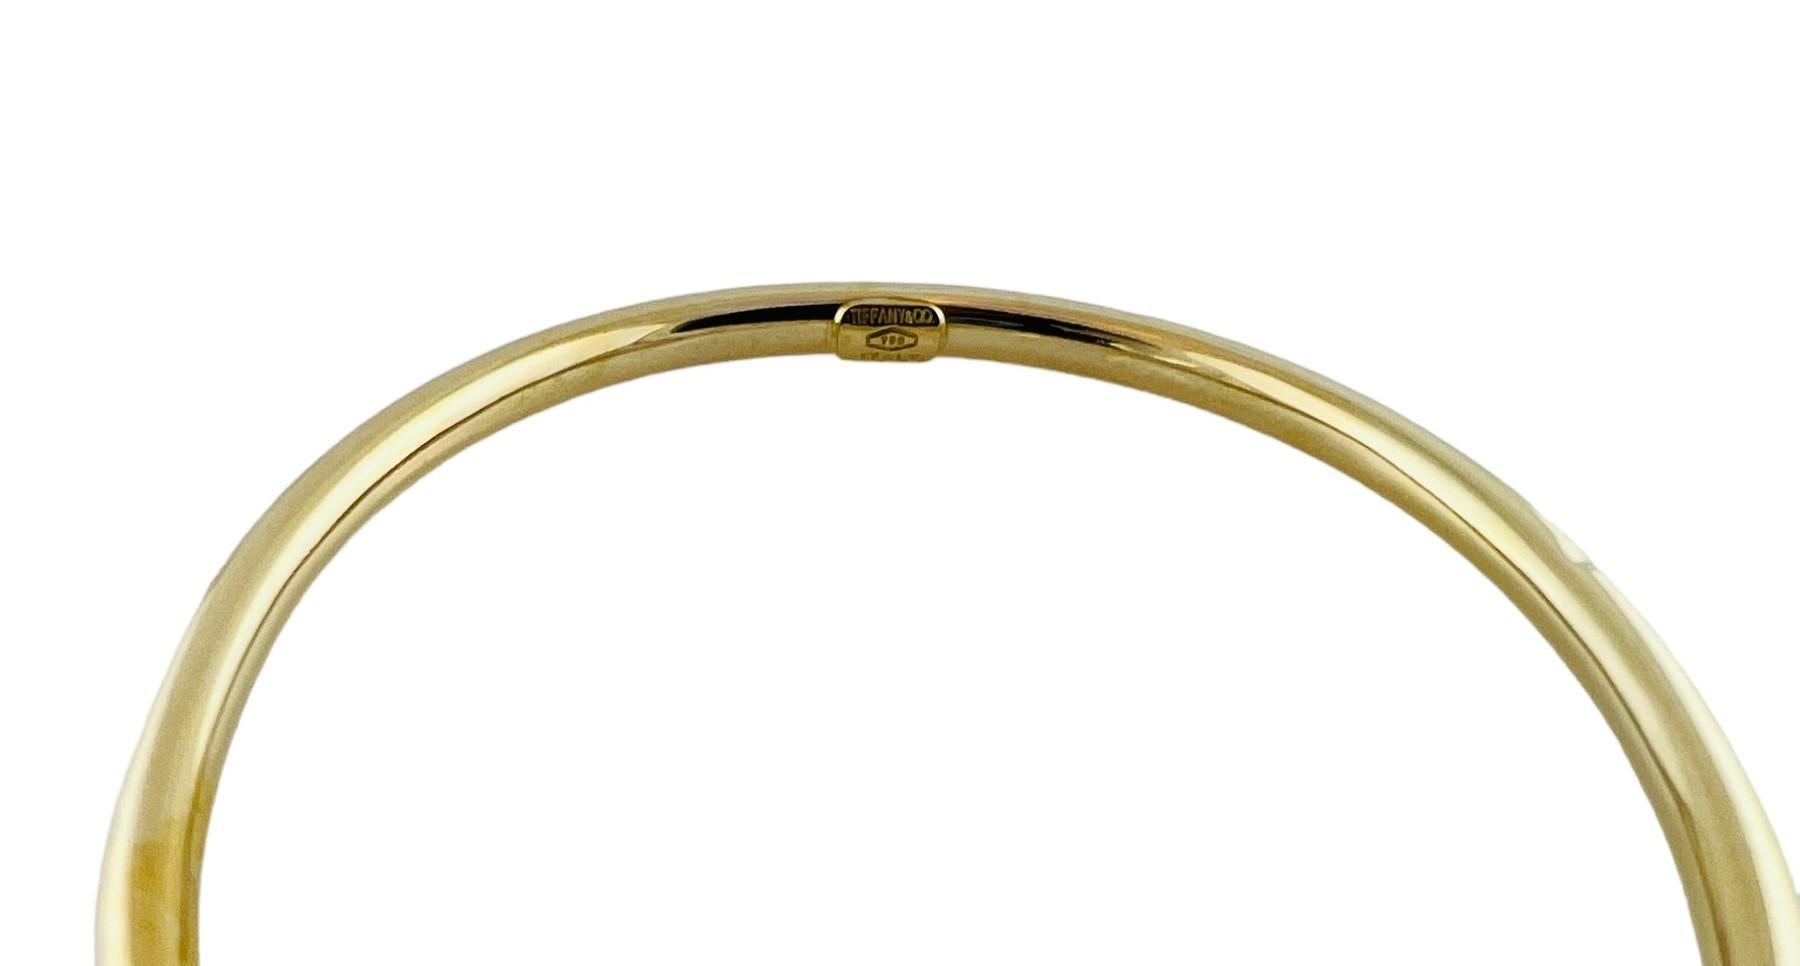 Tiffany & Co. 18K Yellow Gold Oval Bangle Bracelet #16746 3